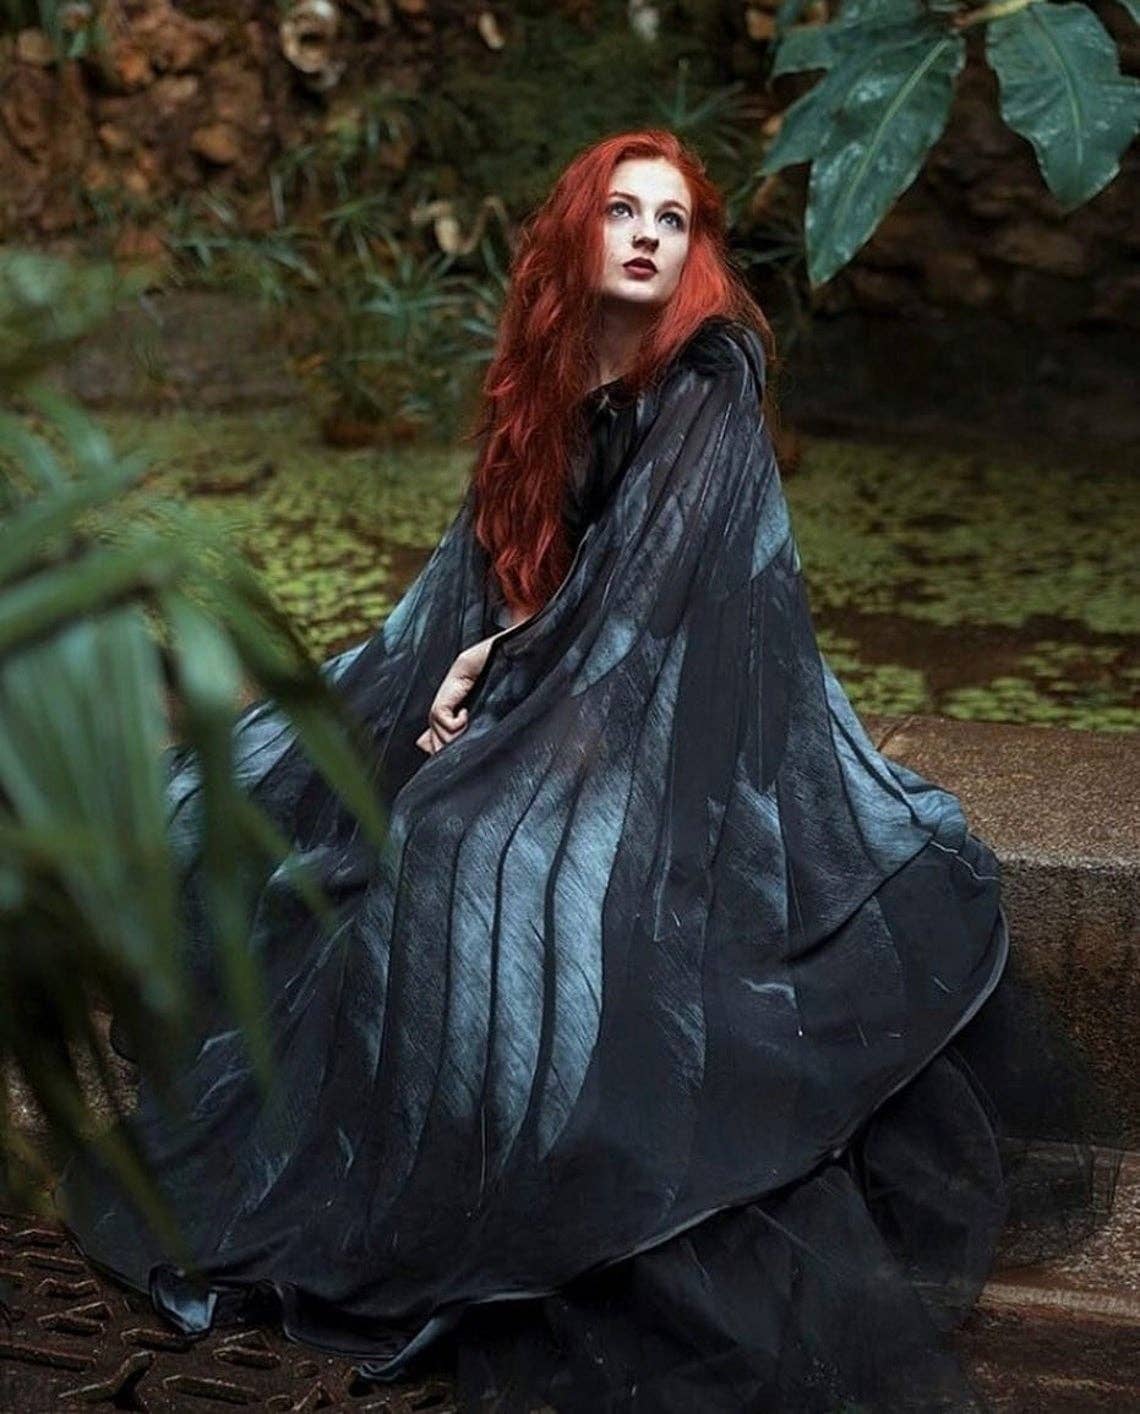 Raven Black wings halloween costume crow bird angel feathers - La De Da